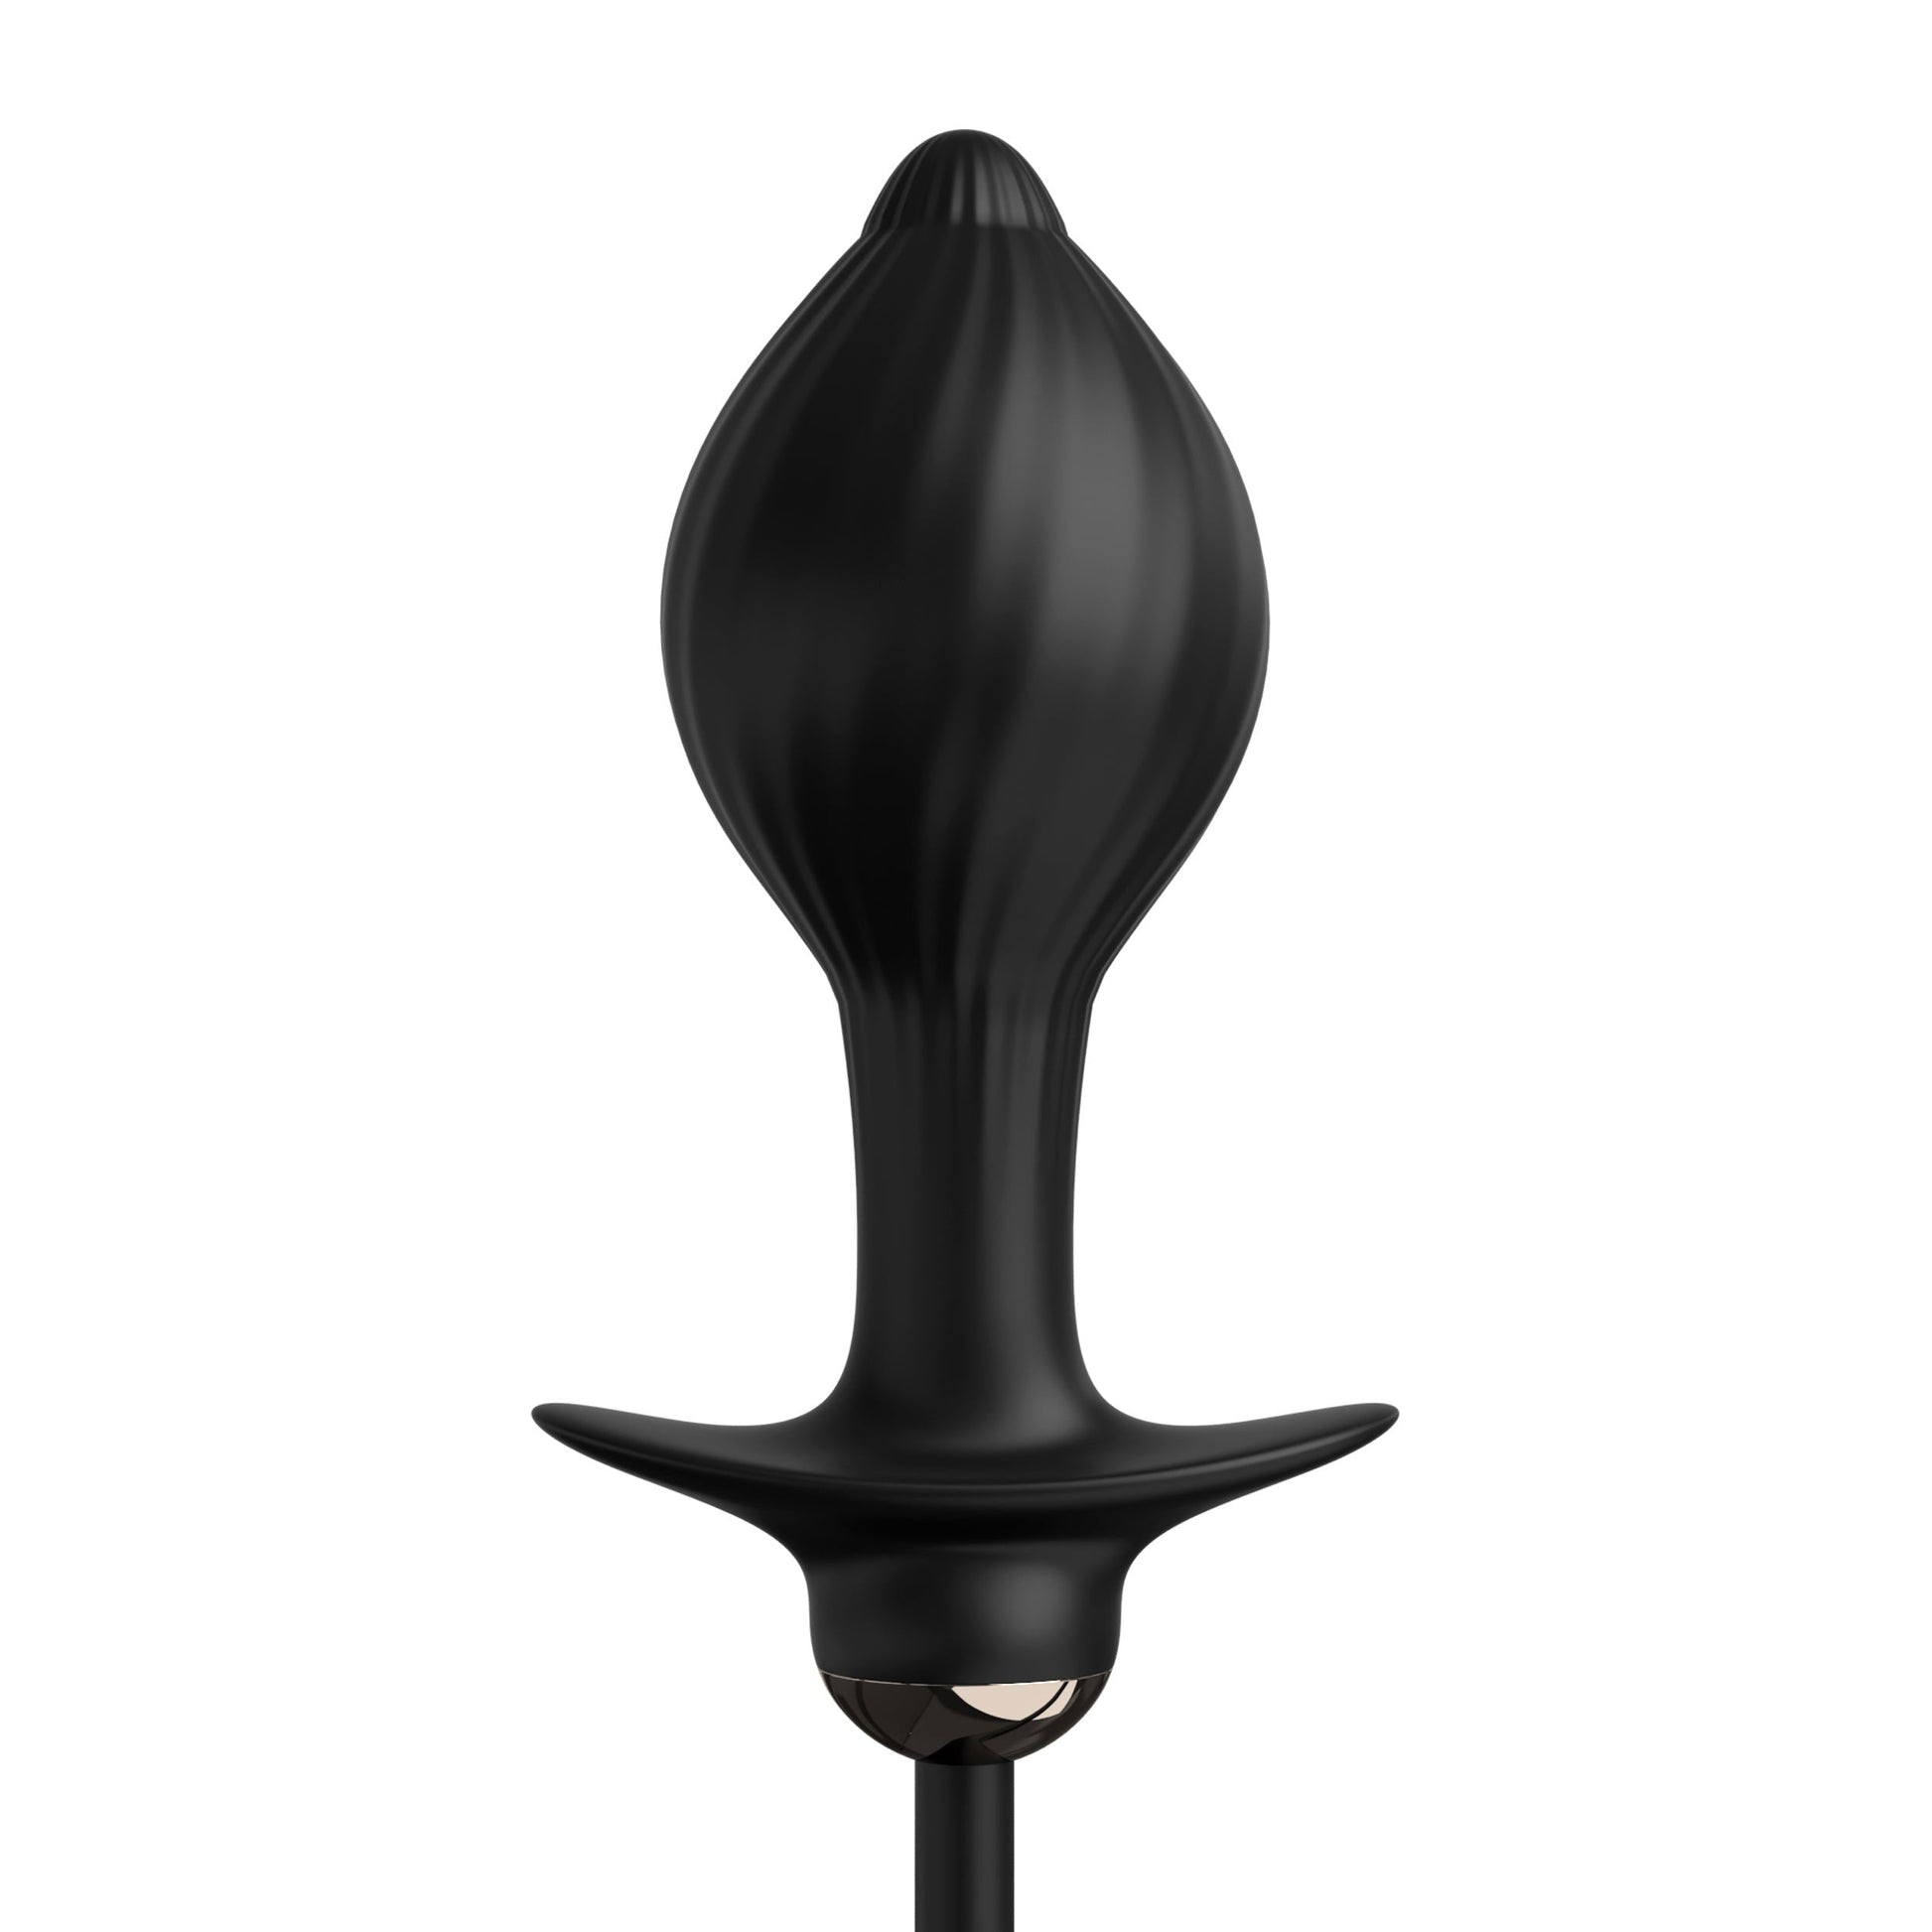 Anal Fantasy Elite Auto-Throb Inflatable Vibrating Plug - Black